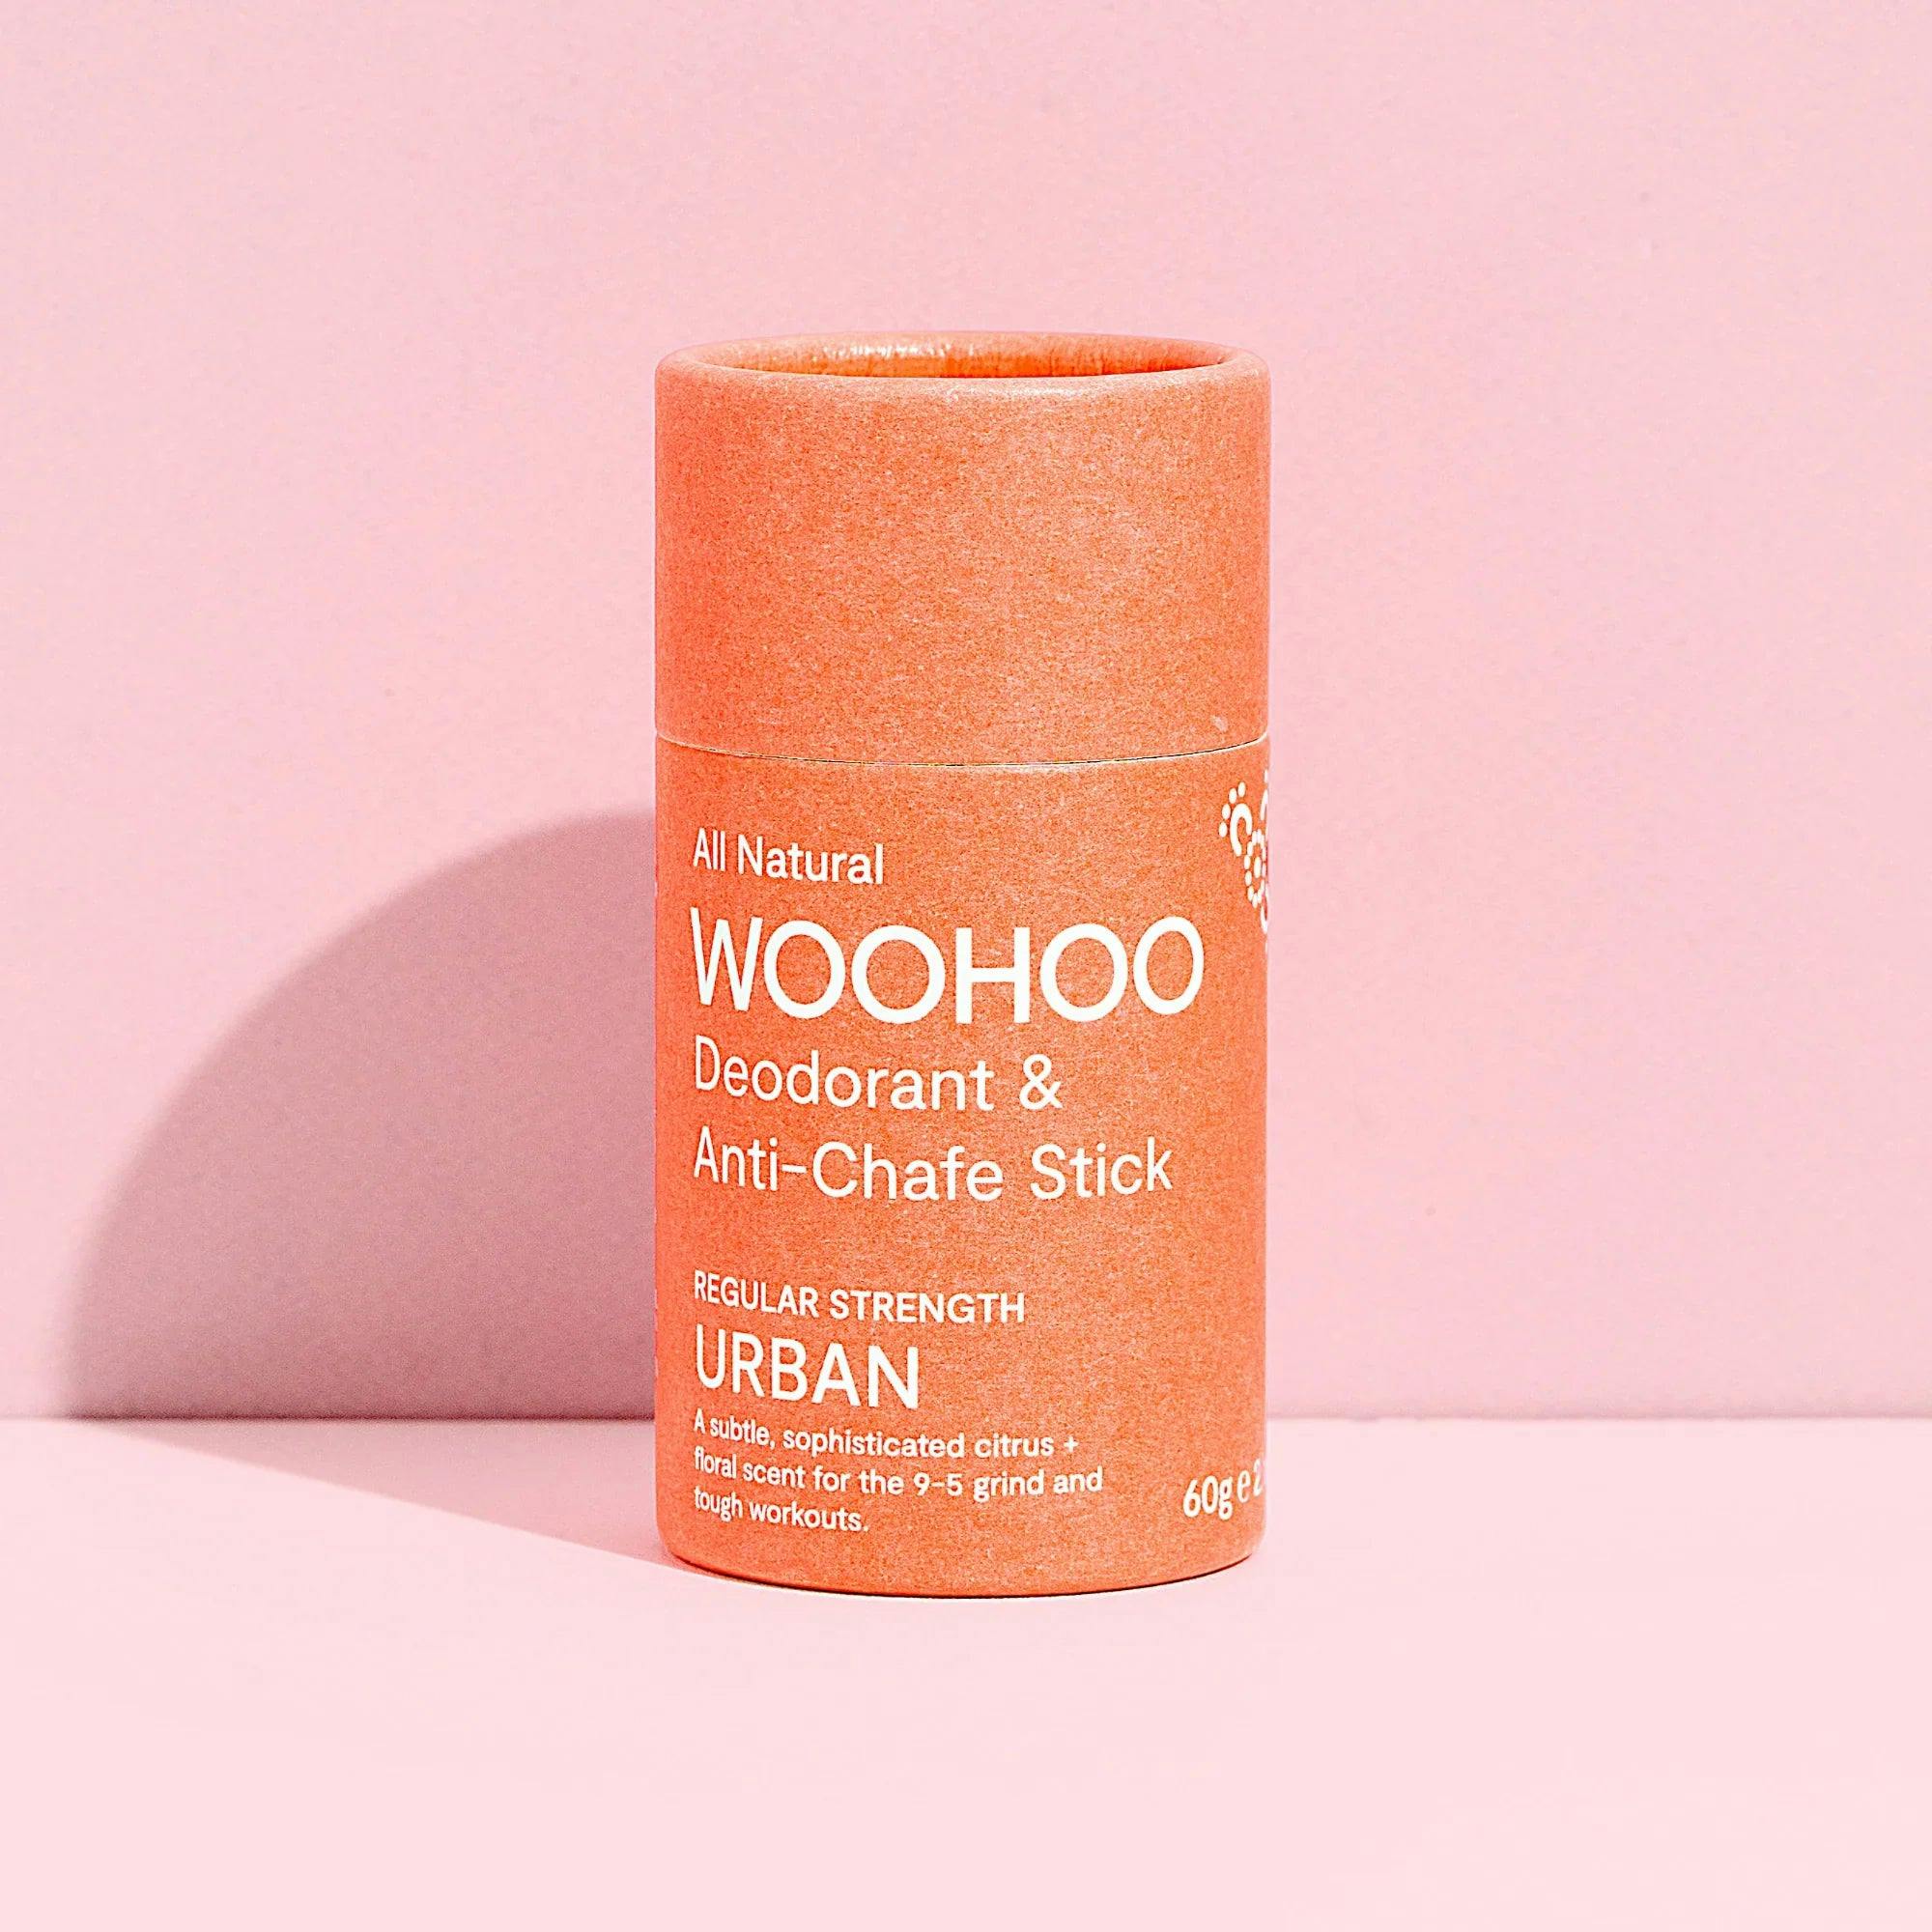 WOOHOO Deodorant & Anti-Chafe Stick Urban 60g